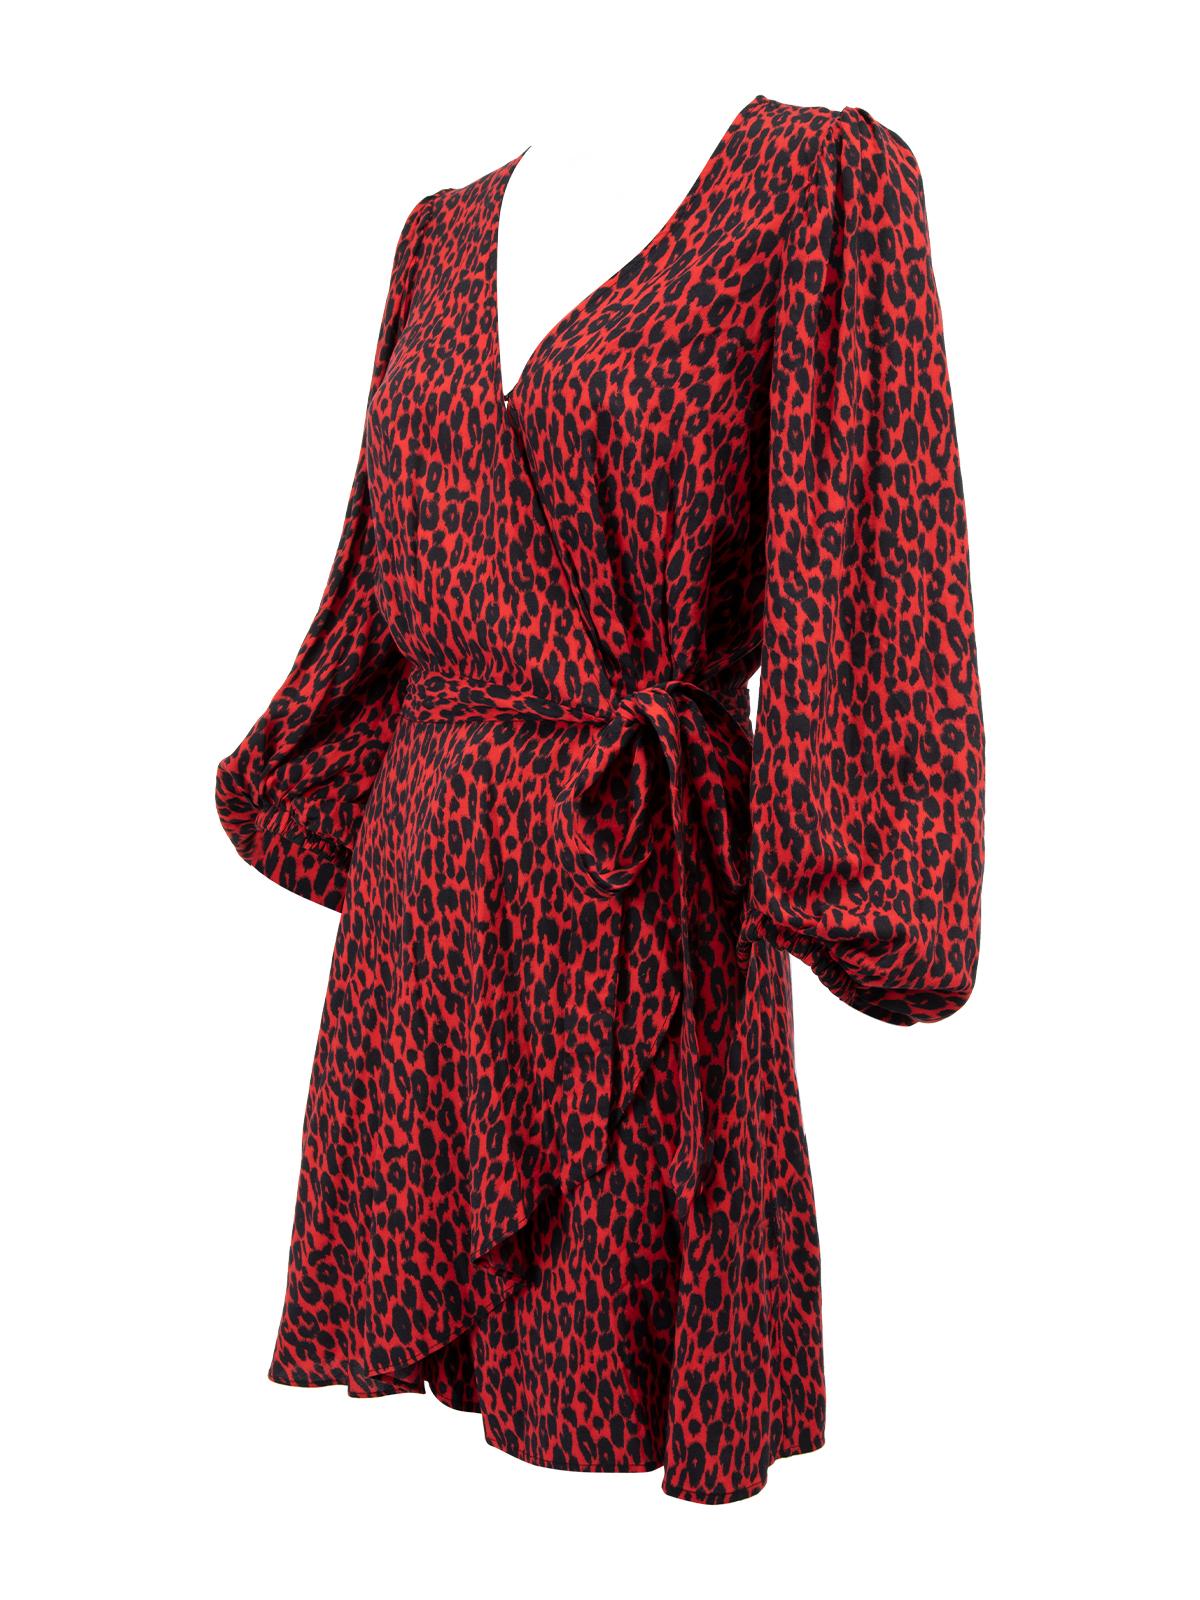 Brown Iro Red and Black Leopard Print Mini Dress Size S